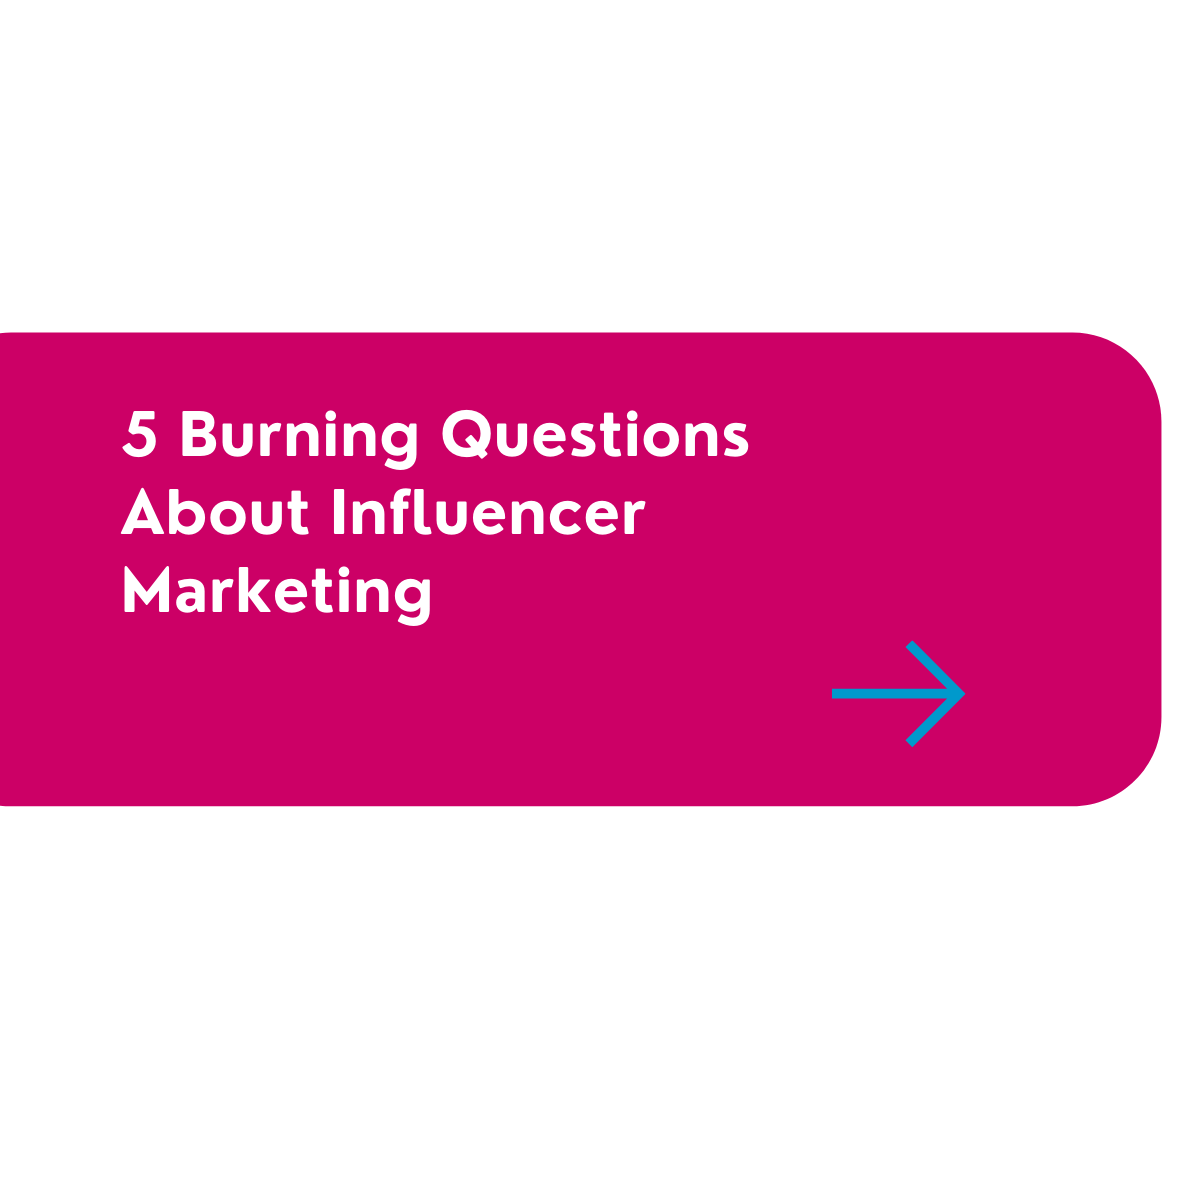 5 Burning Questions